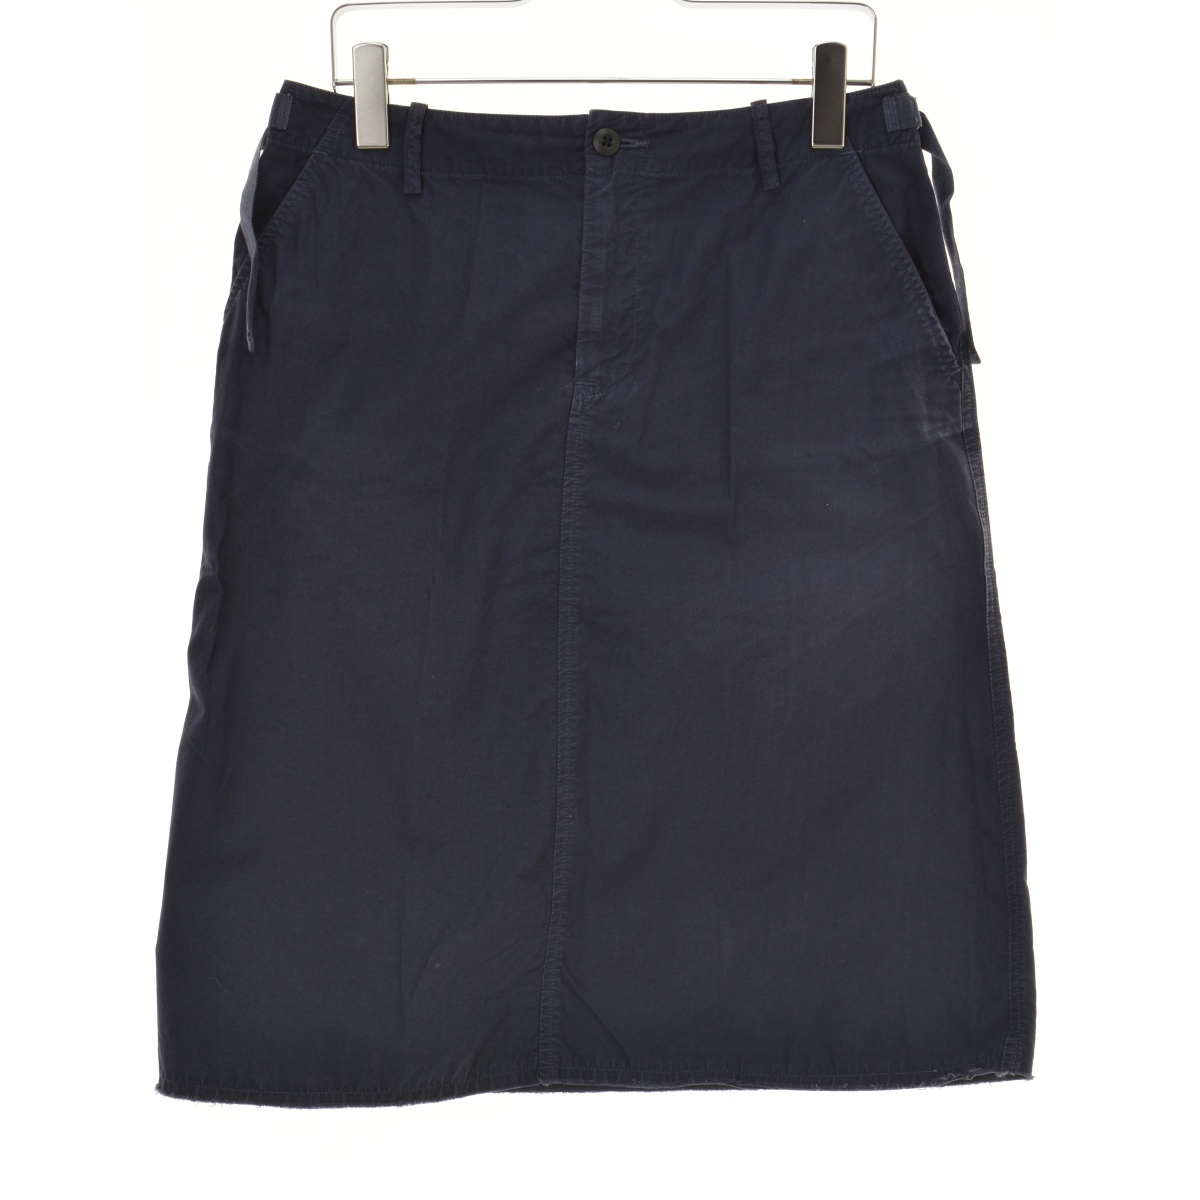 n100 エヌワンハンドレッド<br>nf-1002 Cotton poplin Army Skirt